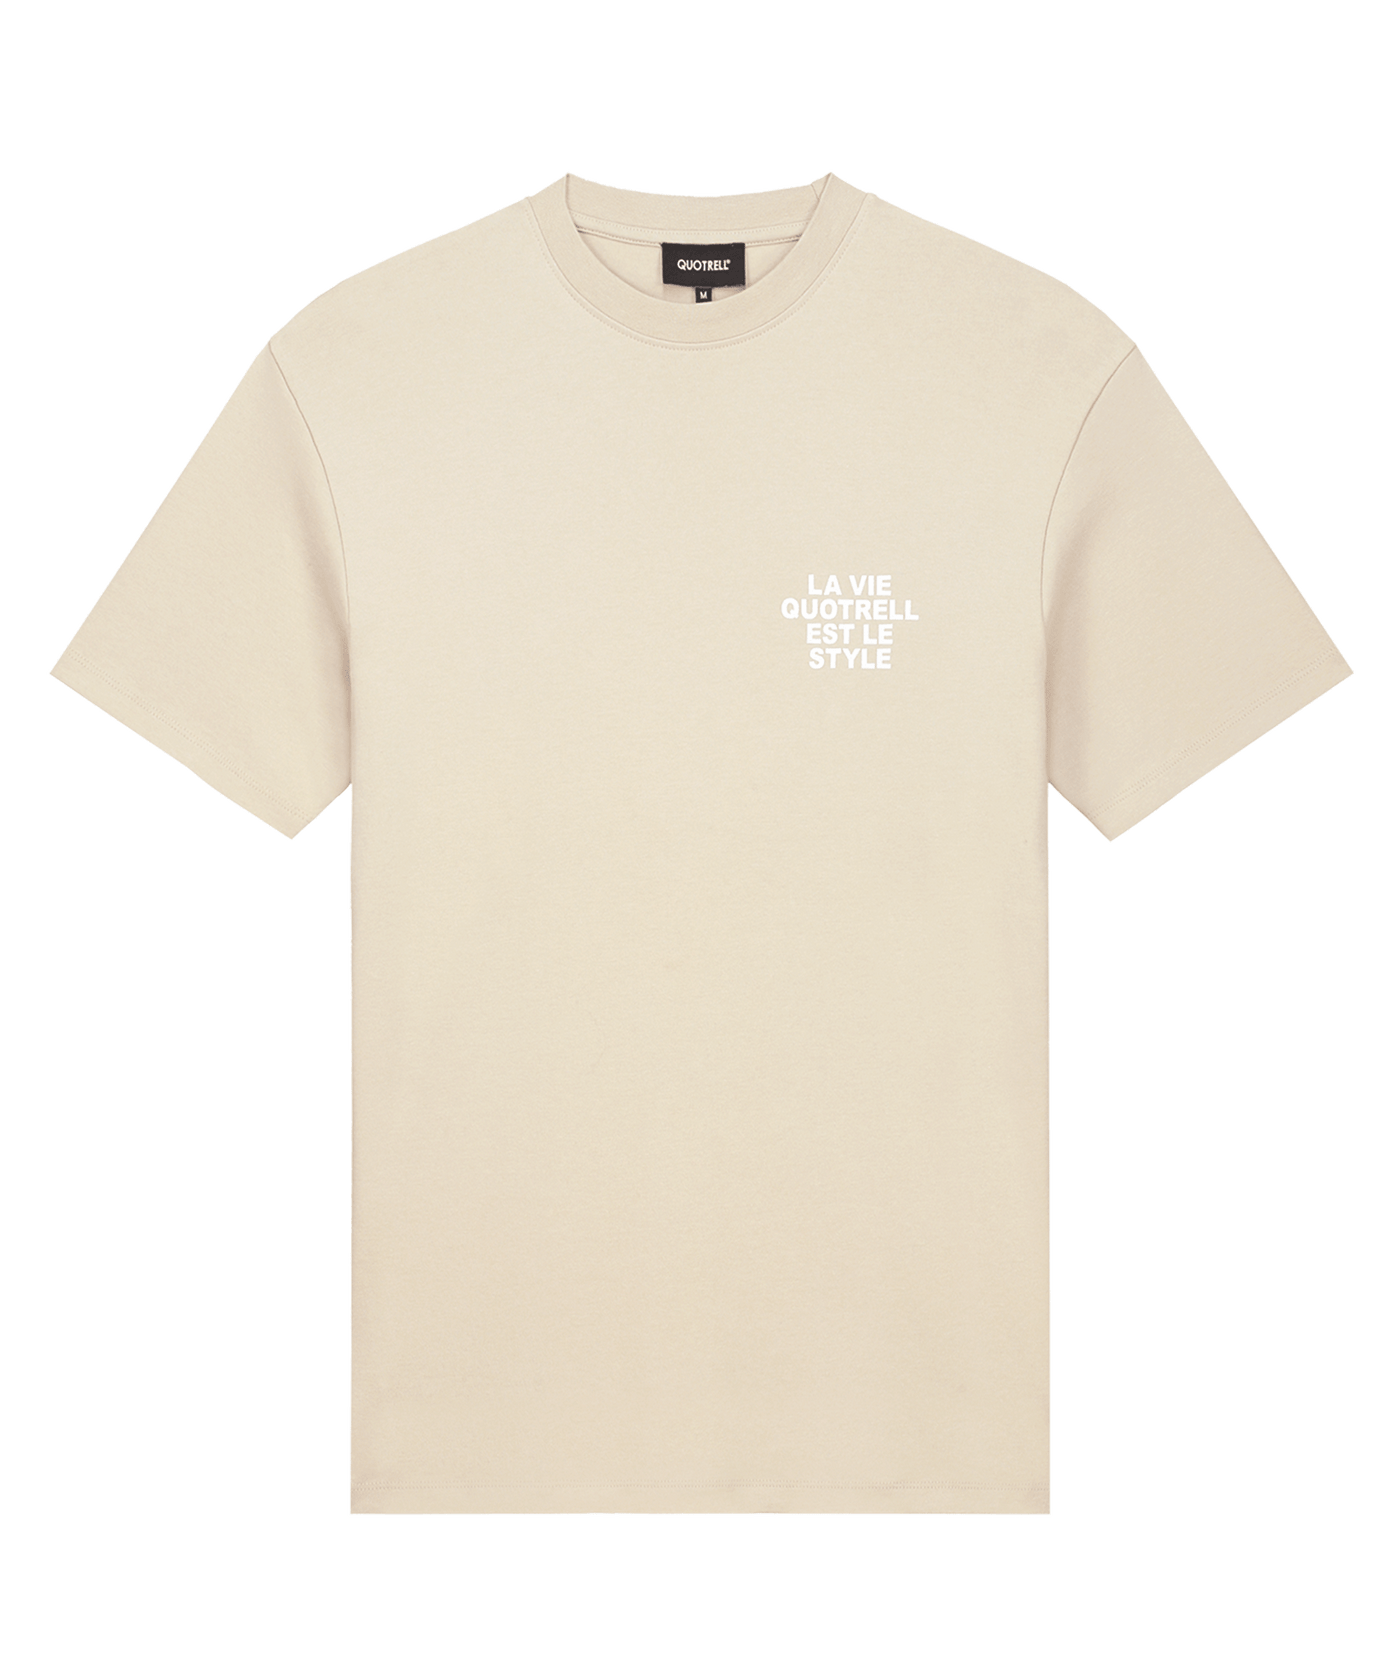 Quotrell - La Vie - T-shirt - Oat/offwhite